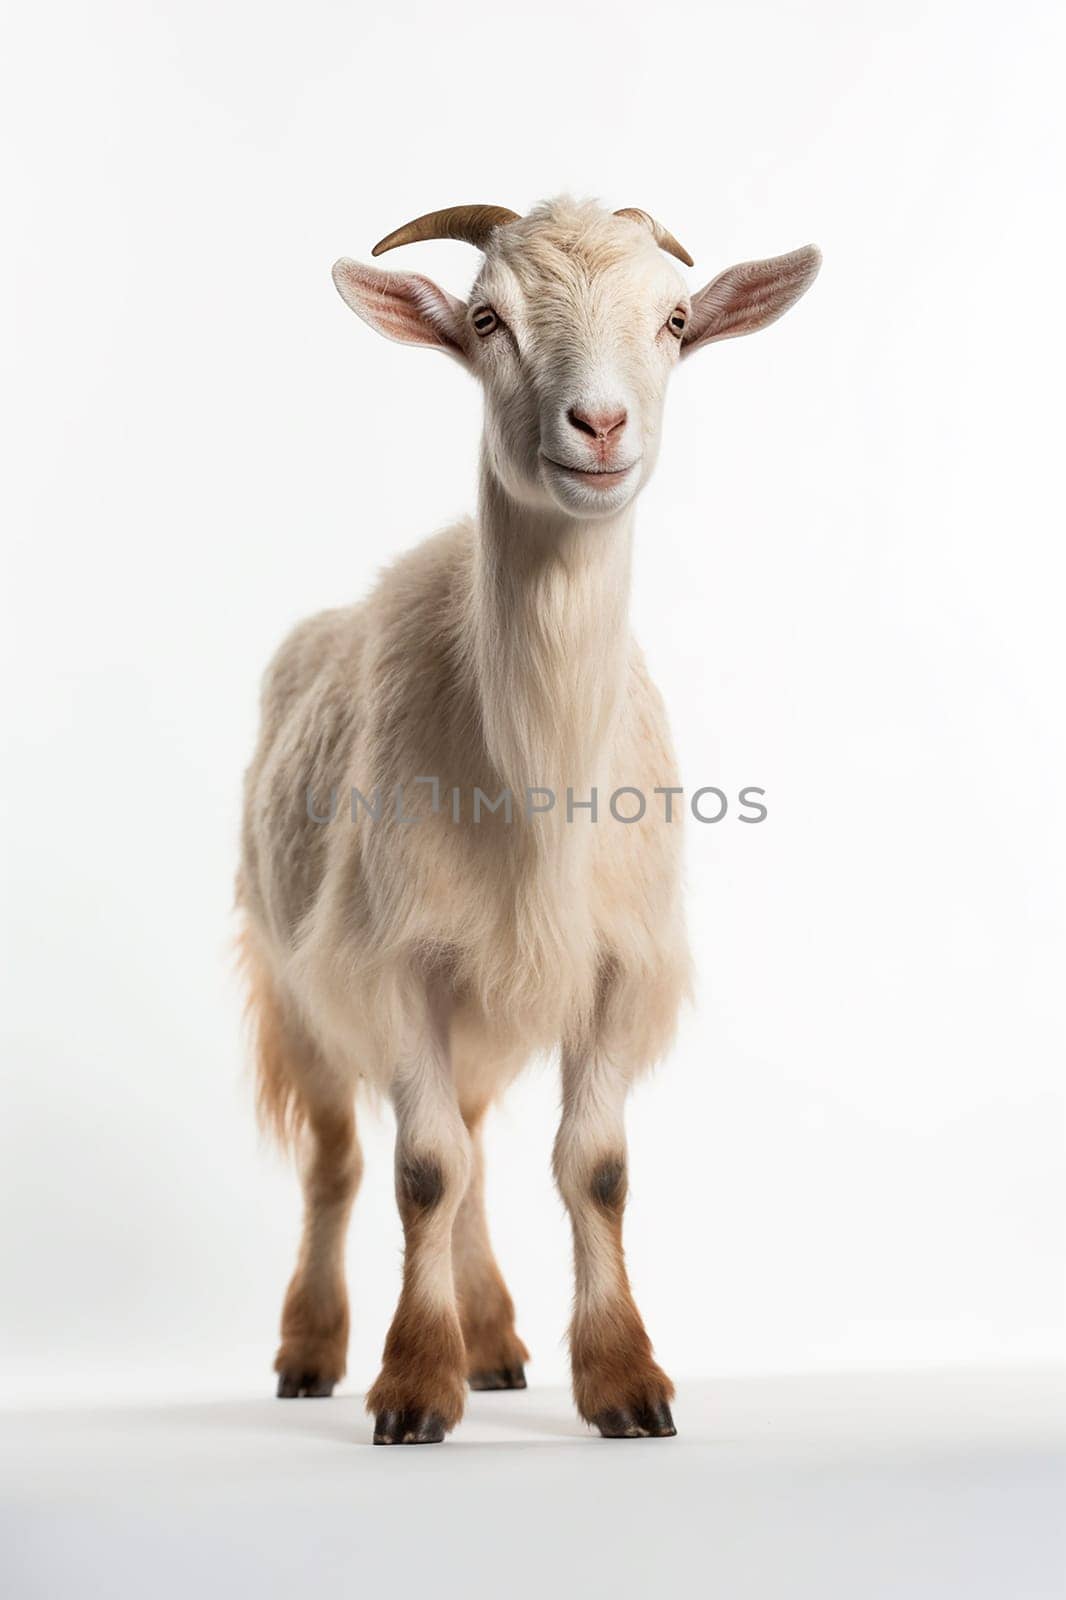 A photo of a farm animal, white goat on white background, real photo